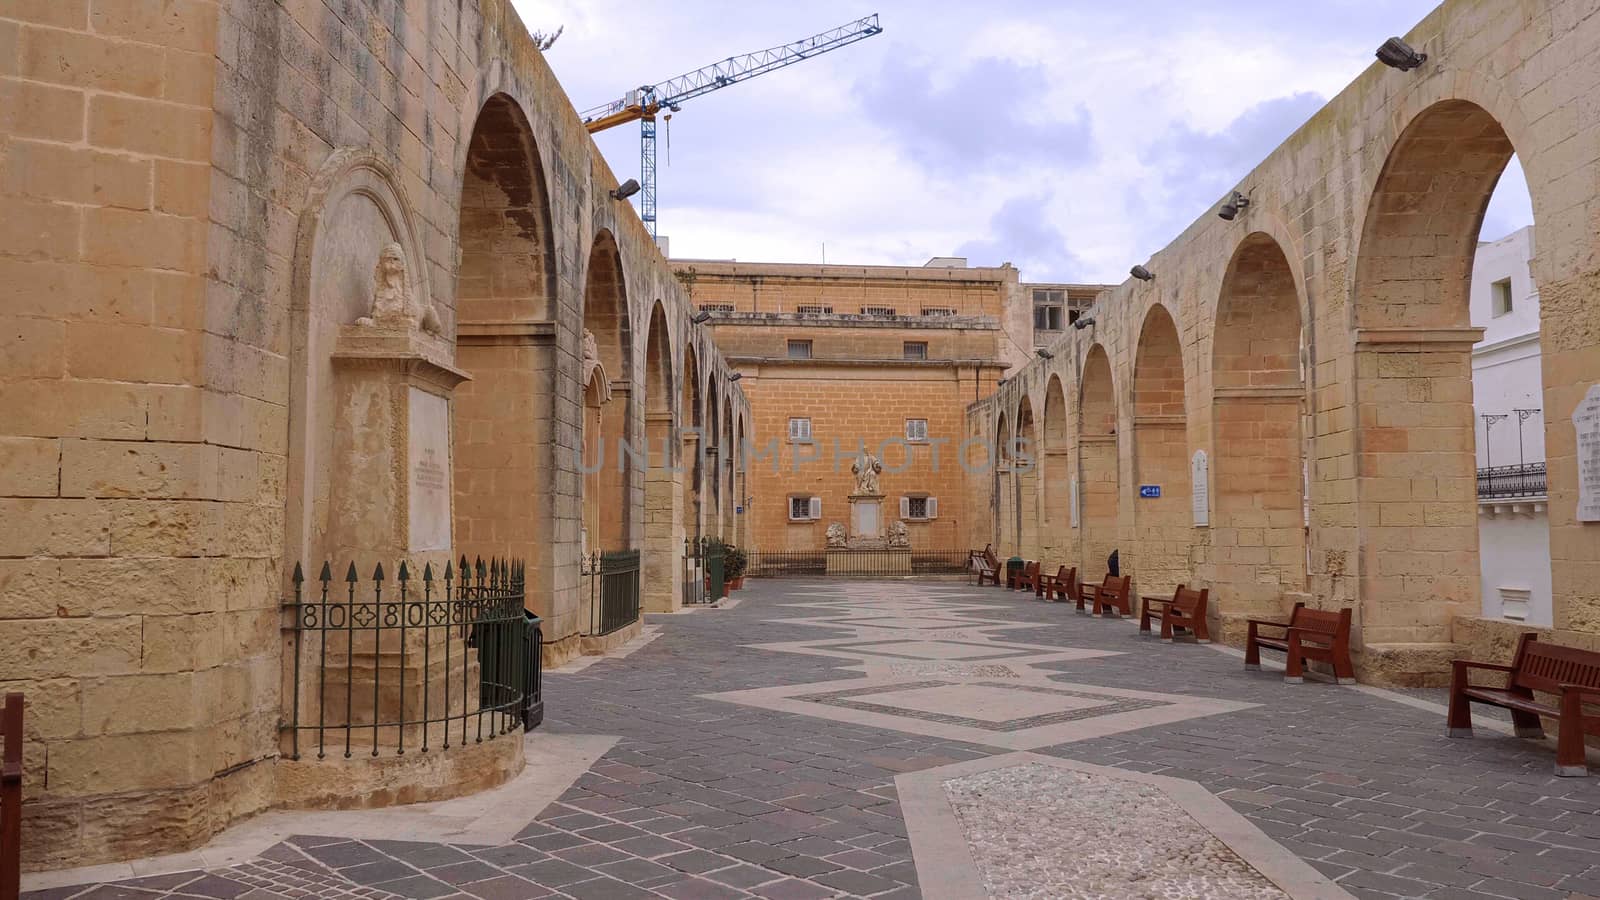 Observation Platform Upper Barrakka Gardens in Valletta Malta by Lattwein